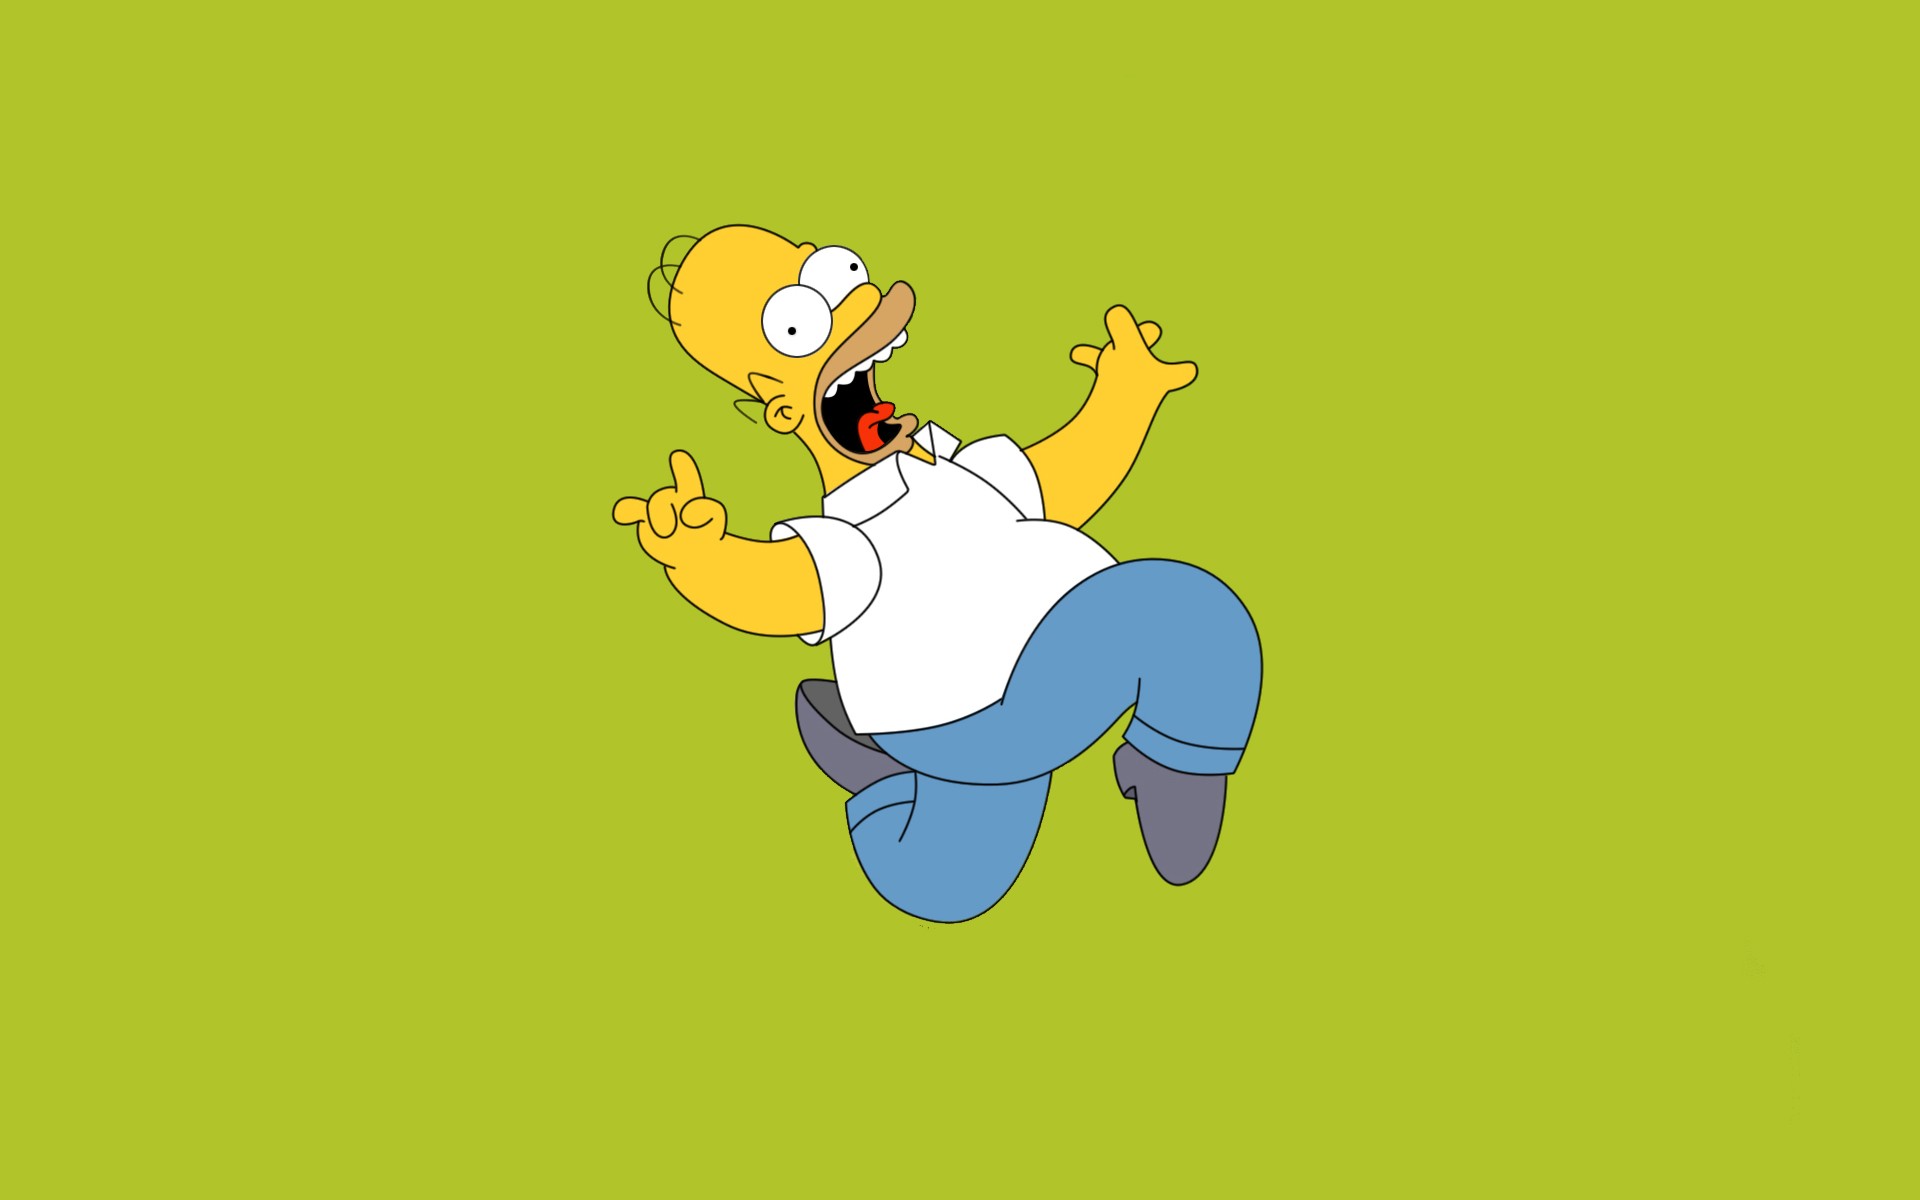 Simpsons Wallpaper - Simpsons Backgrounds Free Download | PixelsTalk ...